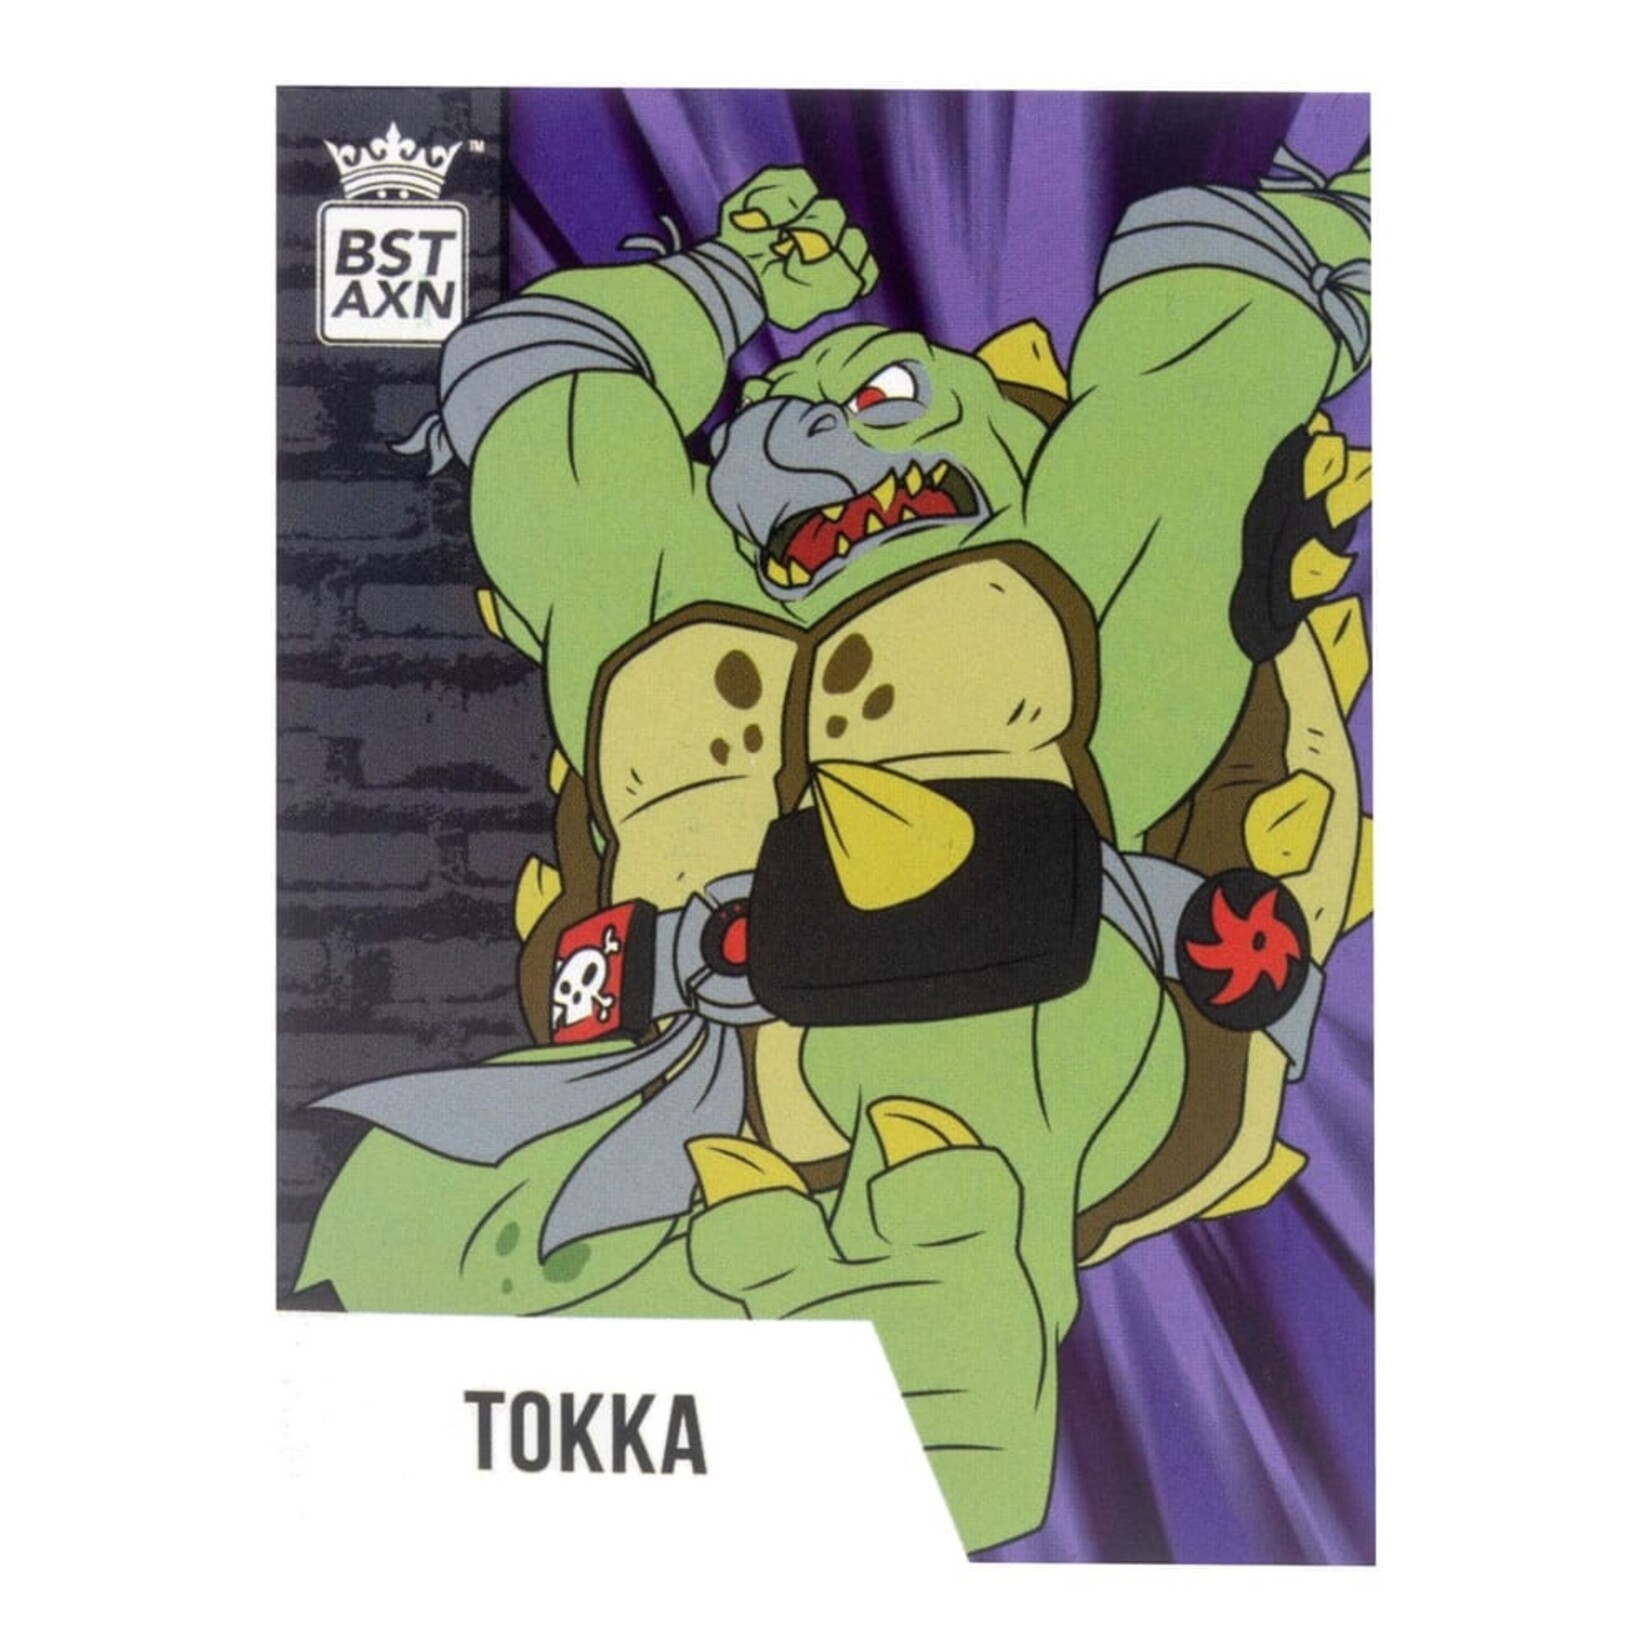 The Loyal Subjects The Loyal Subjects Teenage Mutant Ninja Turtles BST AXN Action Figure Tokka 13 cm